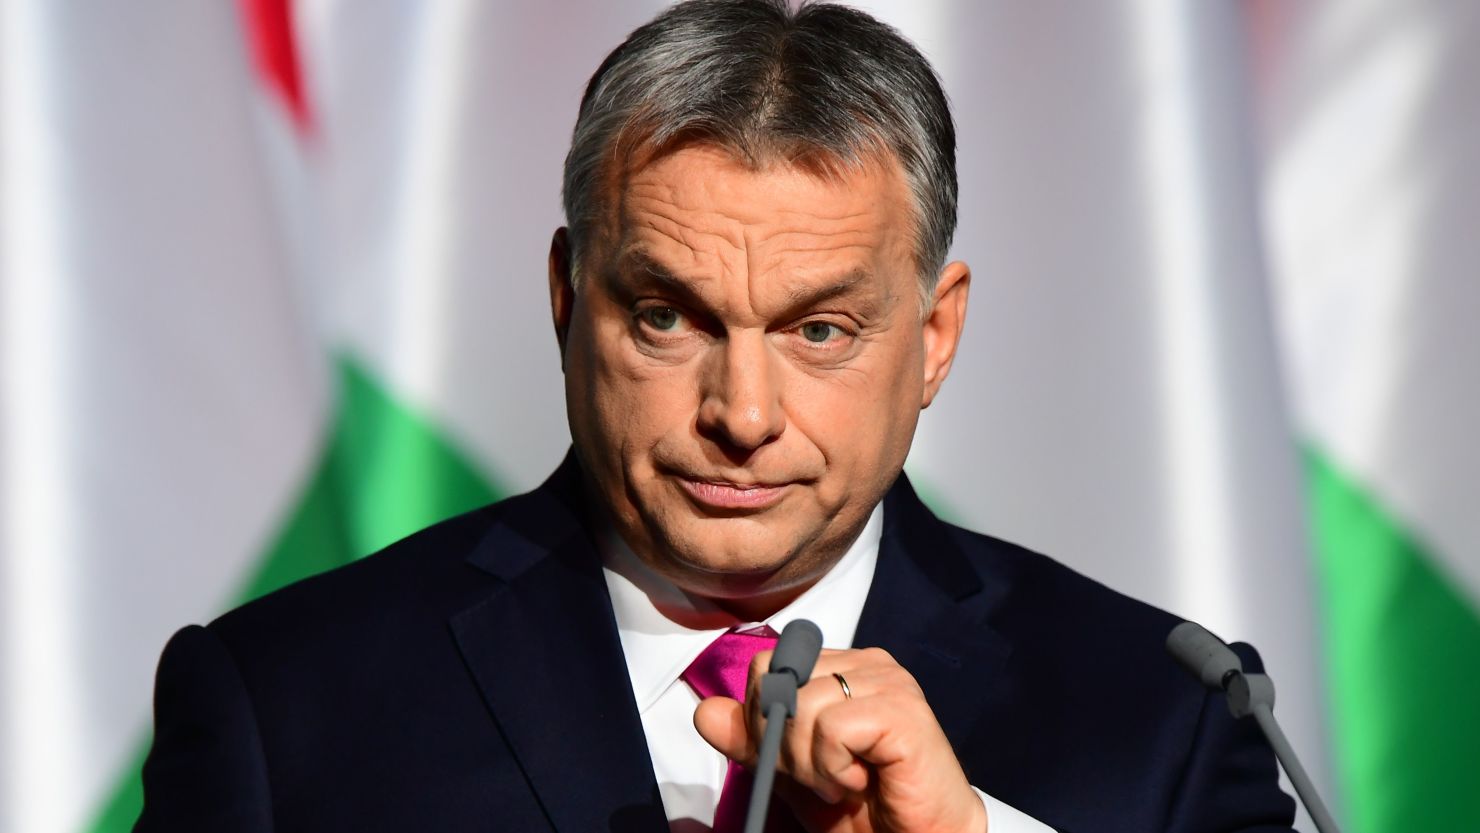 Hungarian Prime Minister Viktor Orban won his third term on an anti-immigration platform. 